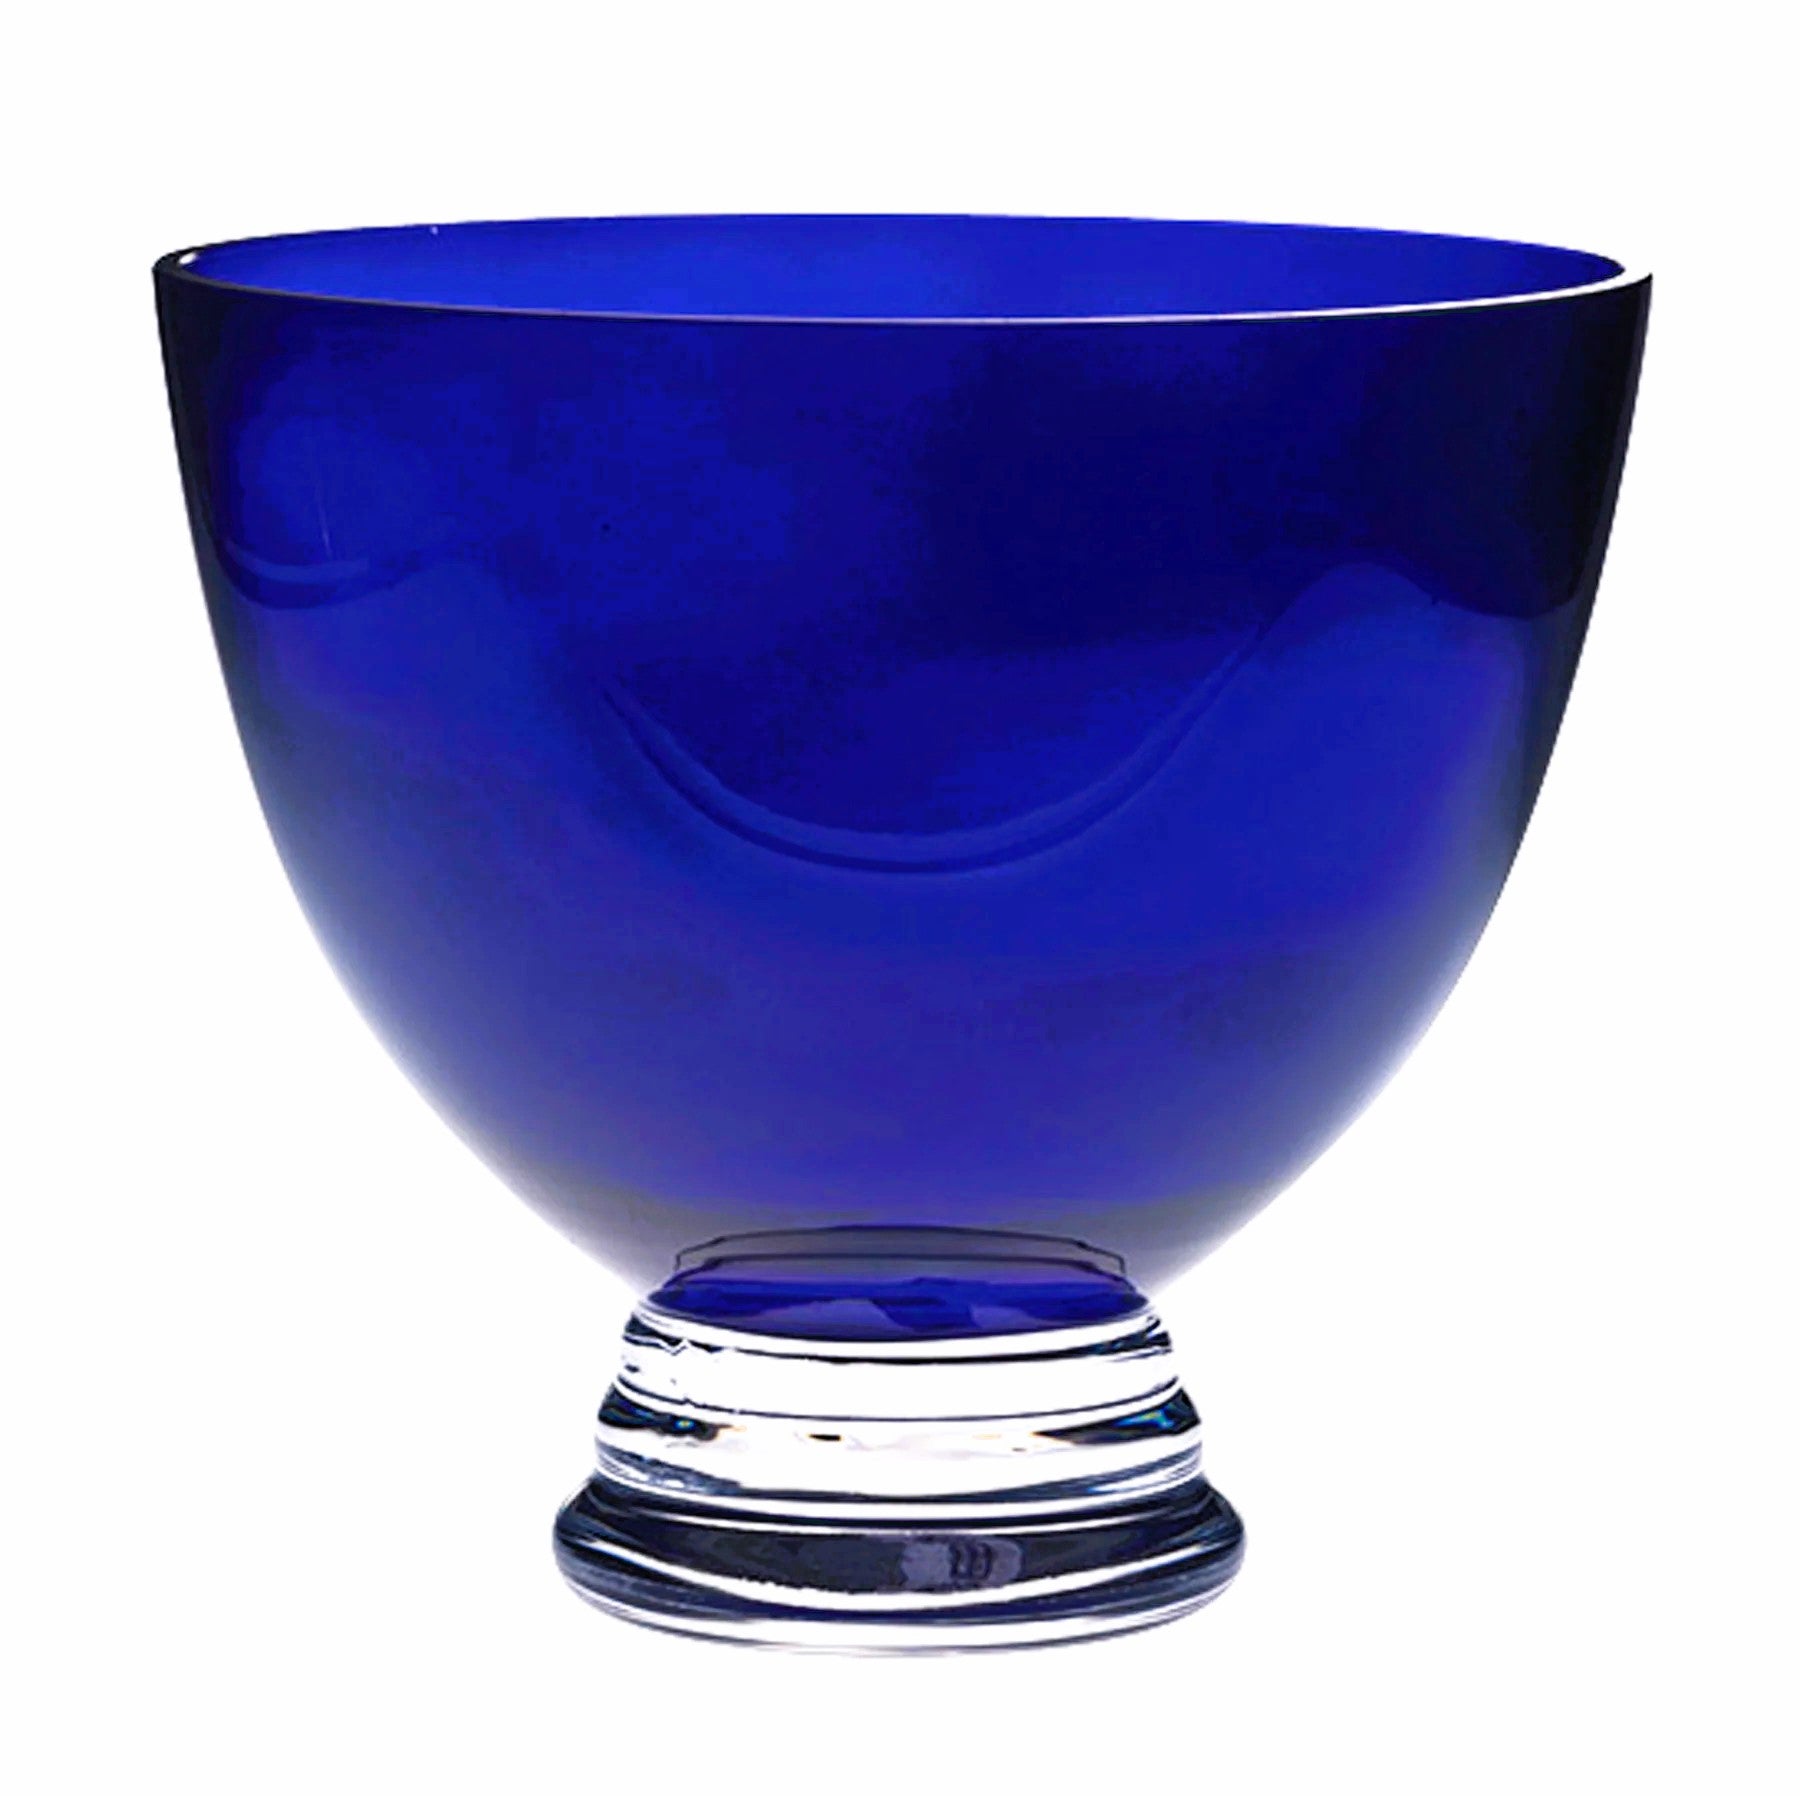 Cobalt Blue Crystal Bowl 11"diameter X 9.3"high Barski Crystal collection